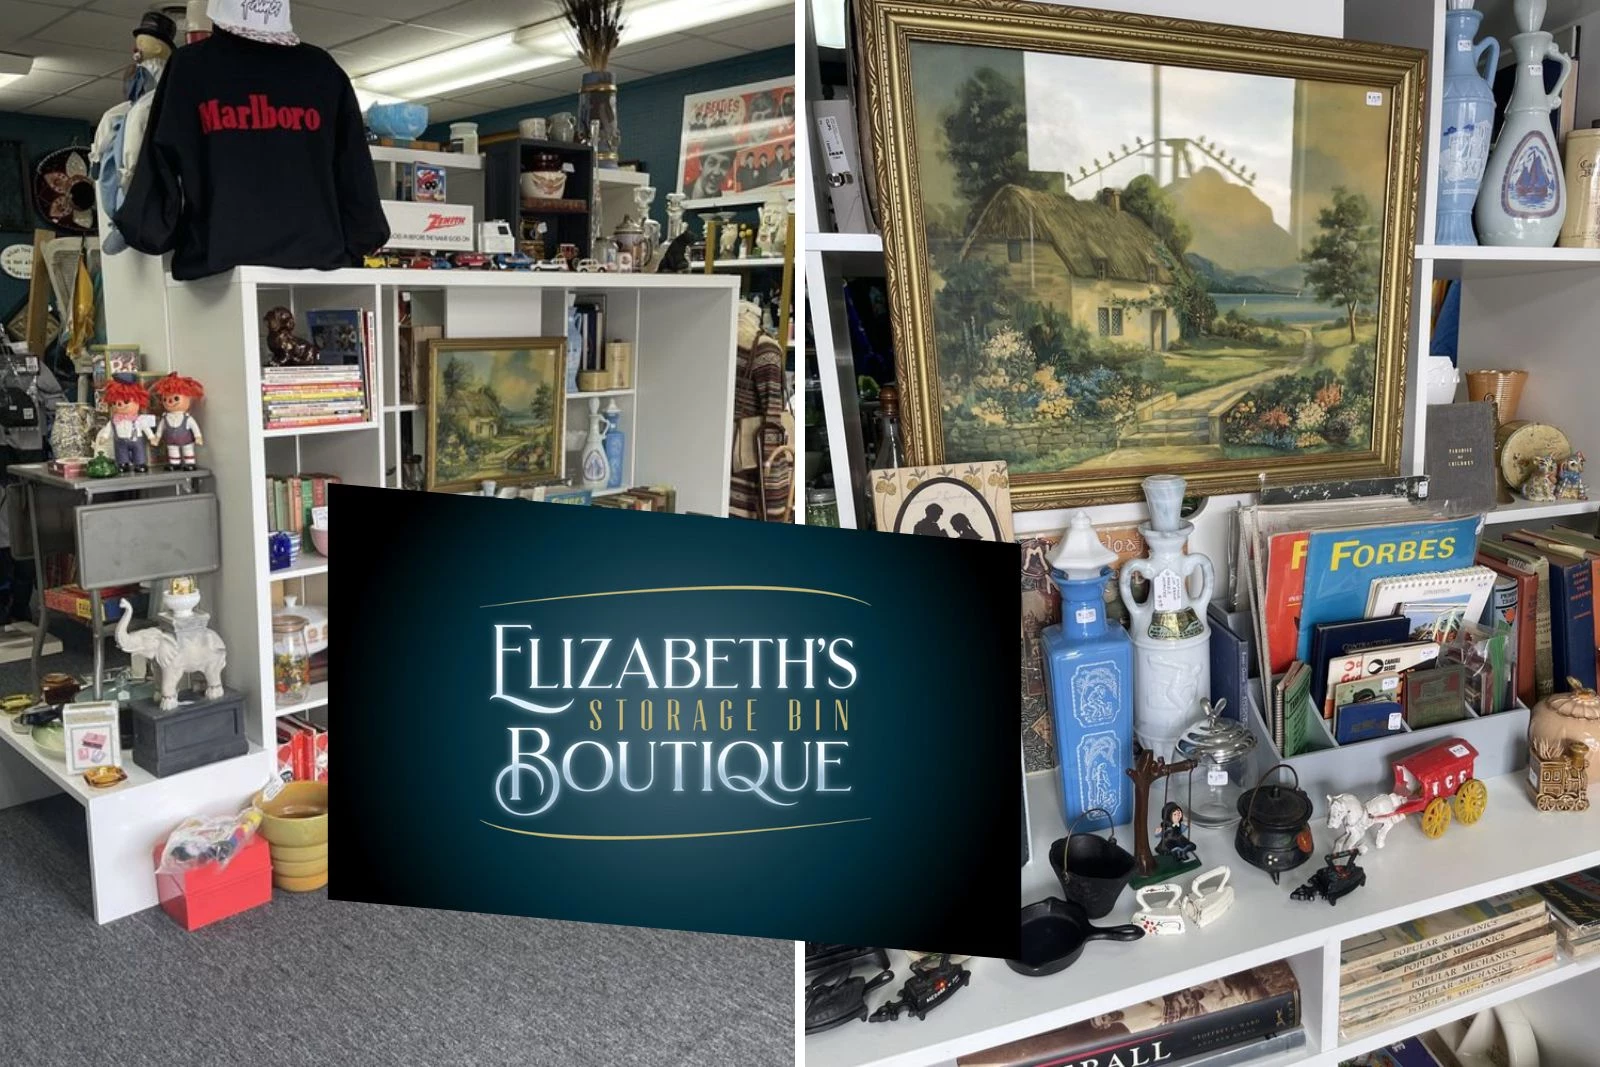 Elizabeth's Storage Bin Boutique Buys Occasional Store